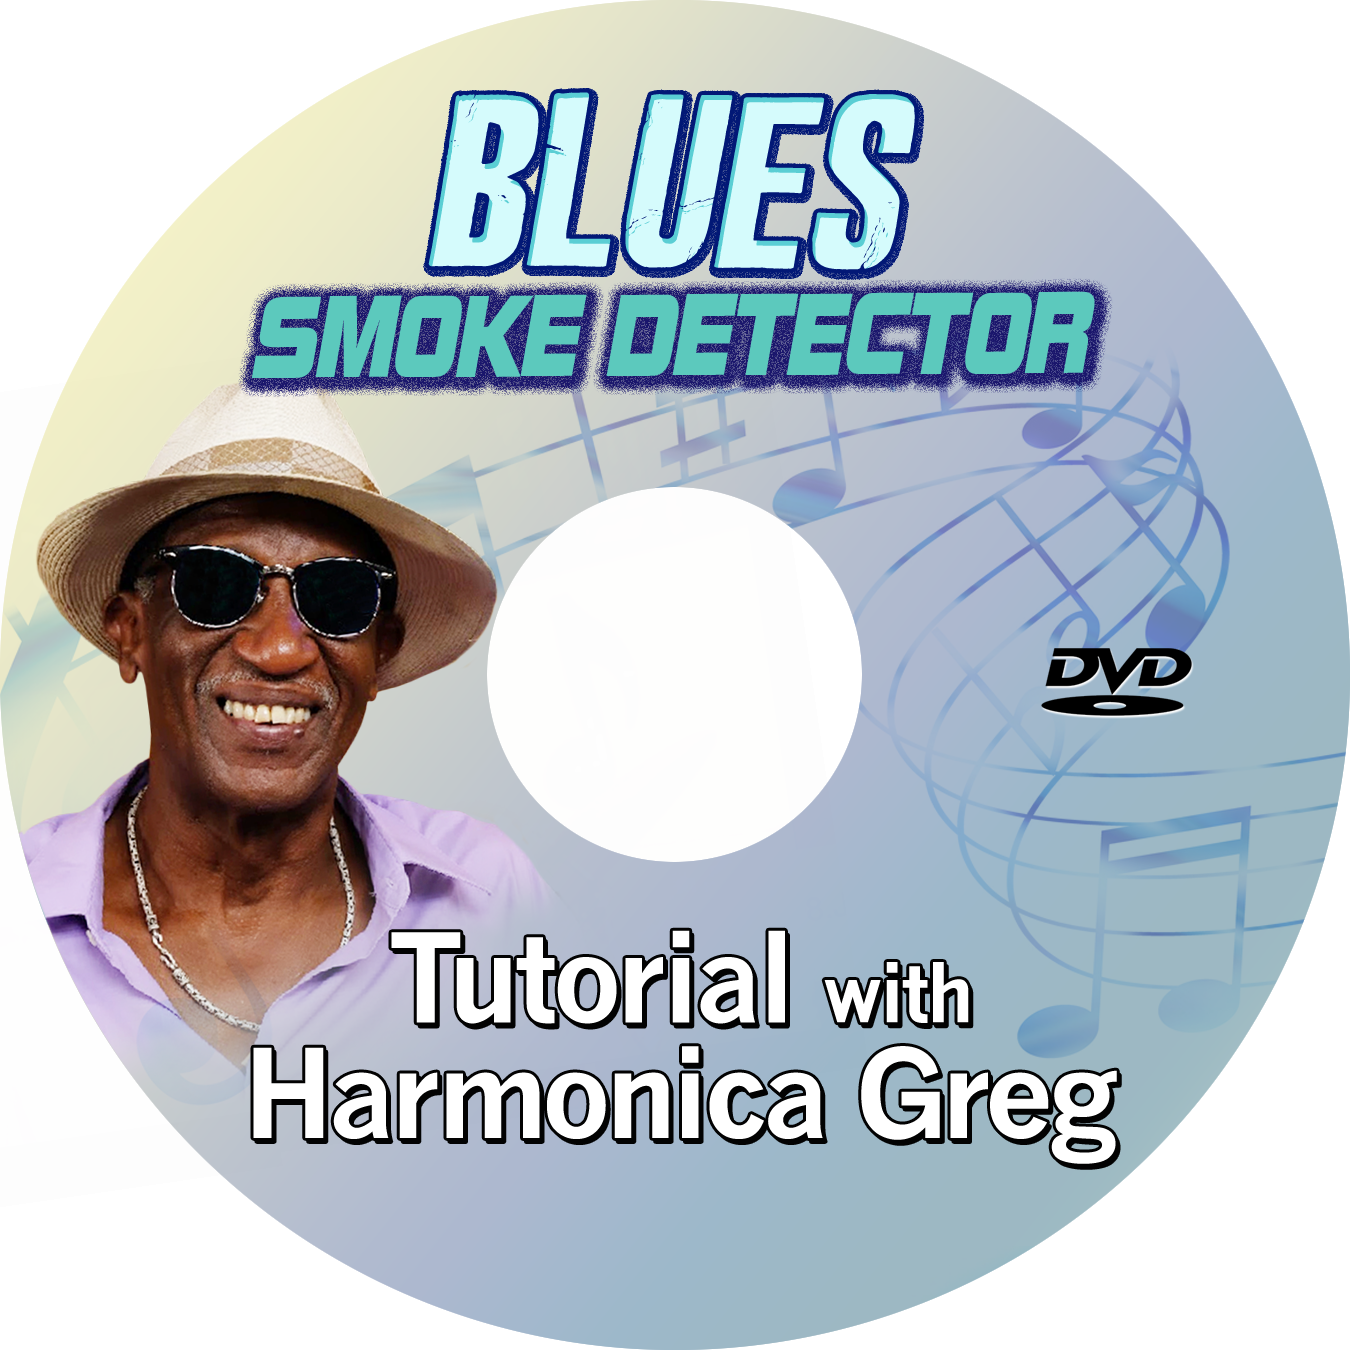 Blues Smoke Detector Tutorial CD Design